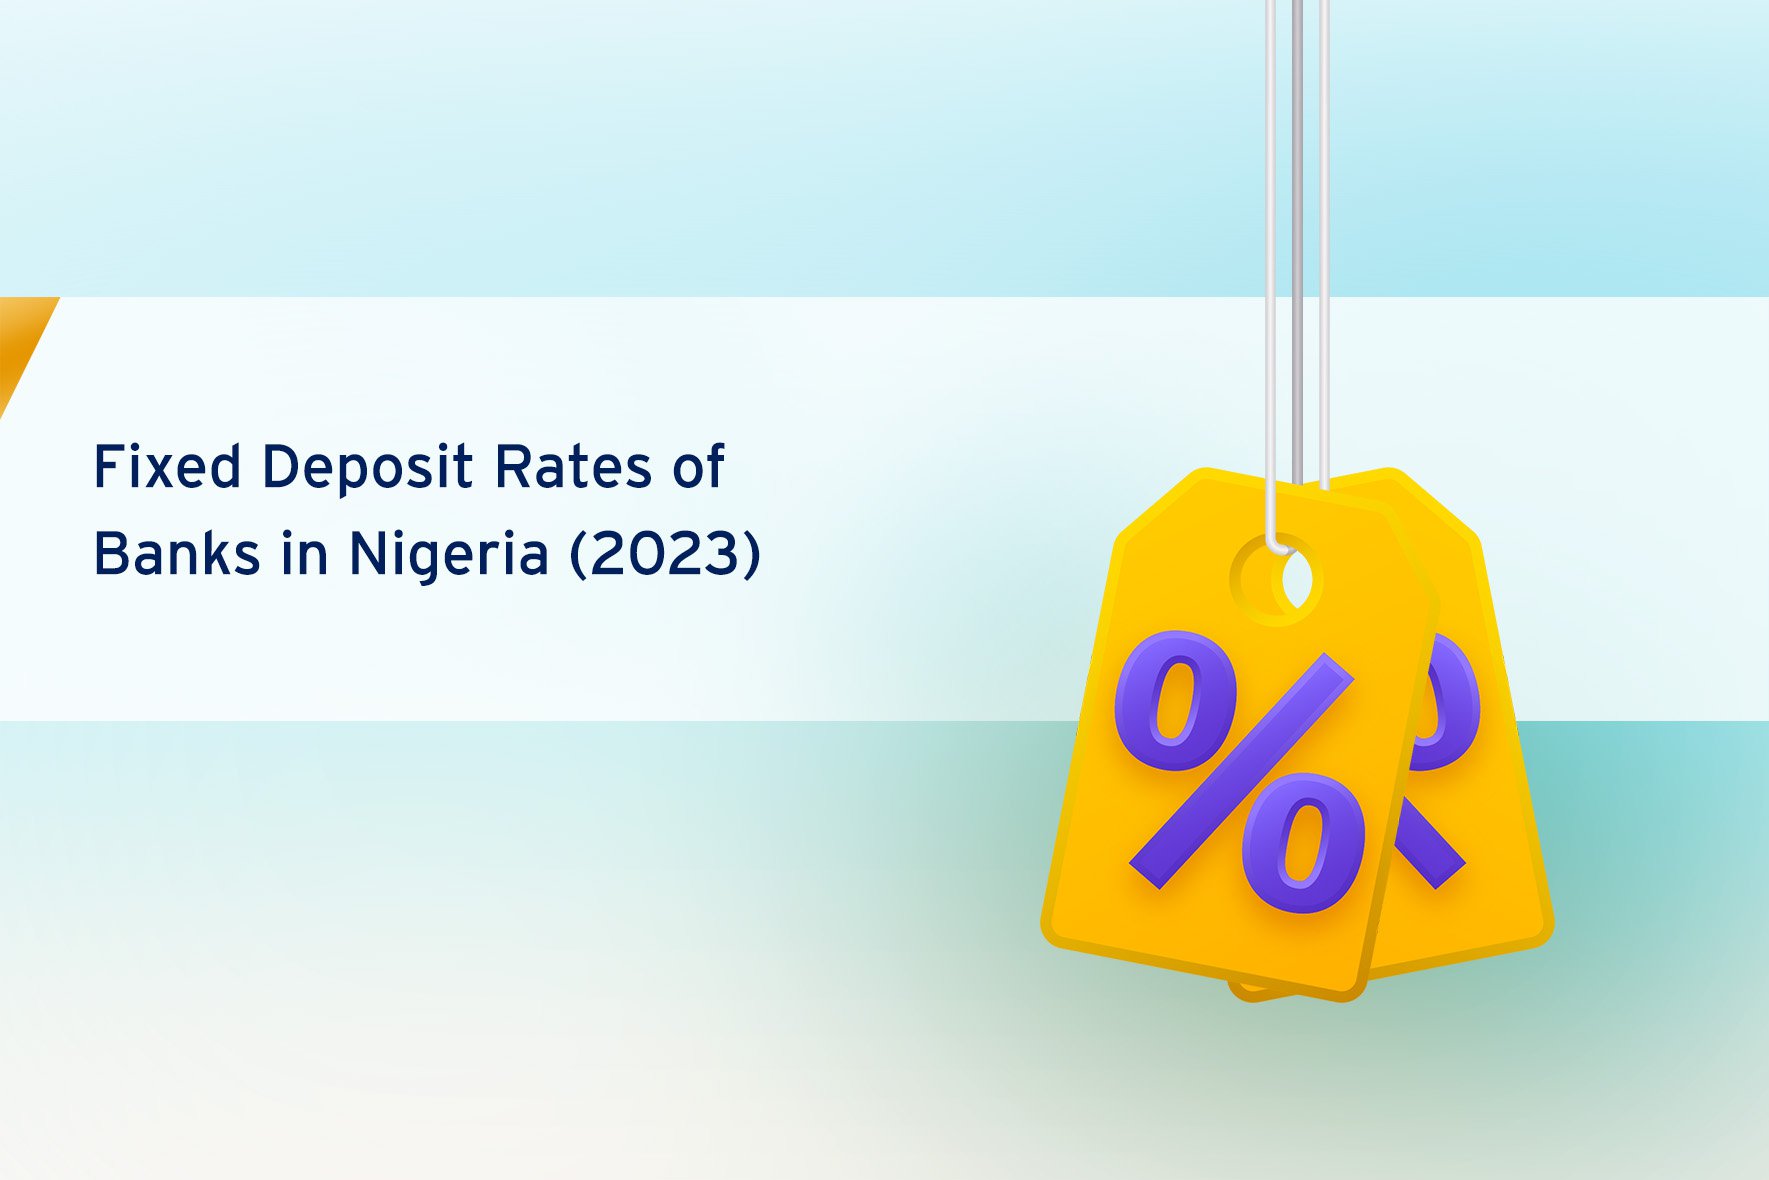 fixed deposit interest rates